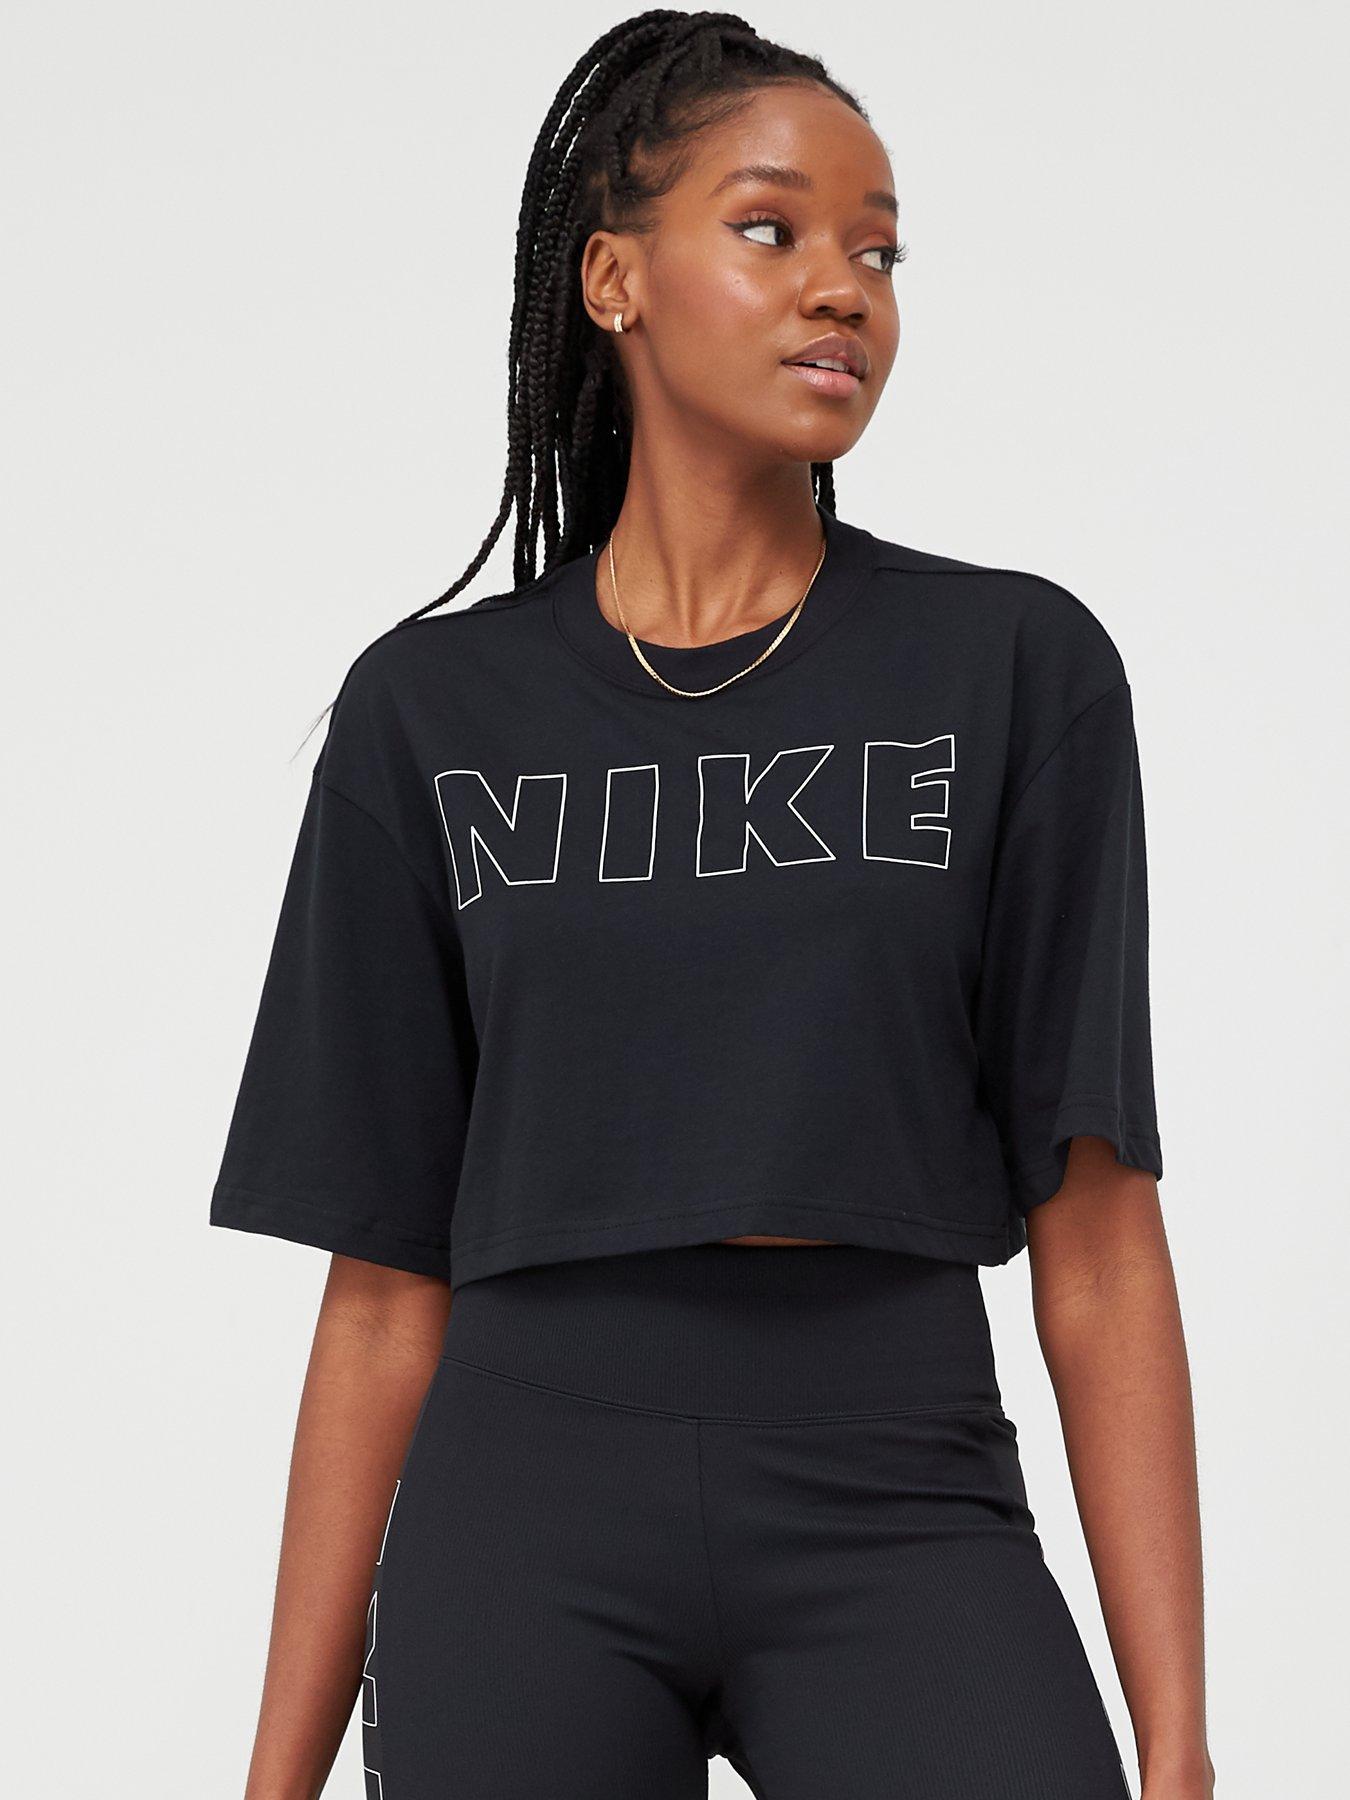 nike women's shirts clearance